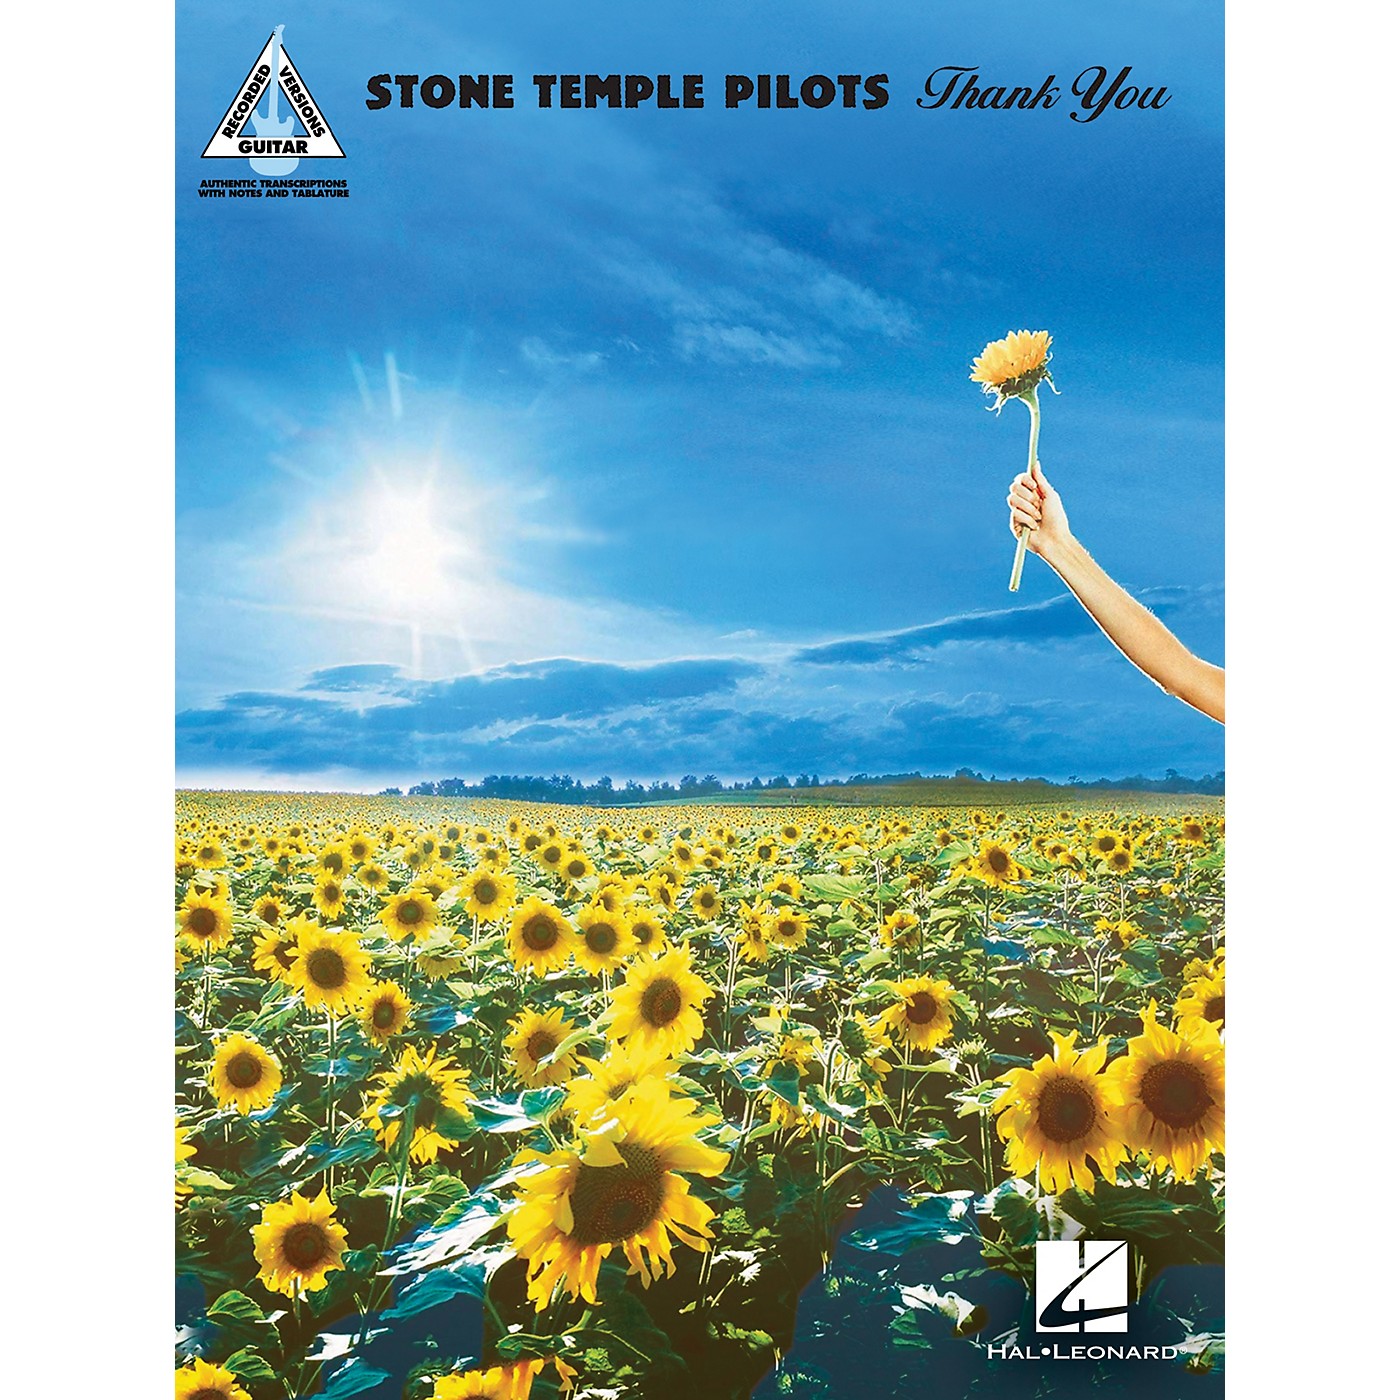 Hal Leonard Stone Temple Pilots - Thank You Guitar Tab Songbook thumbnail